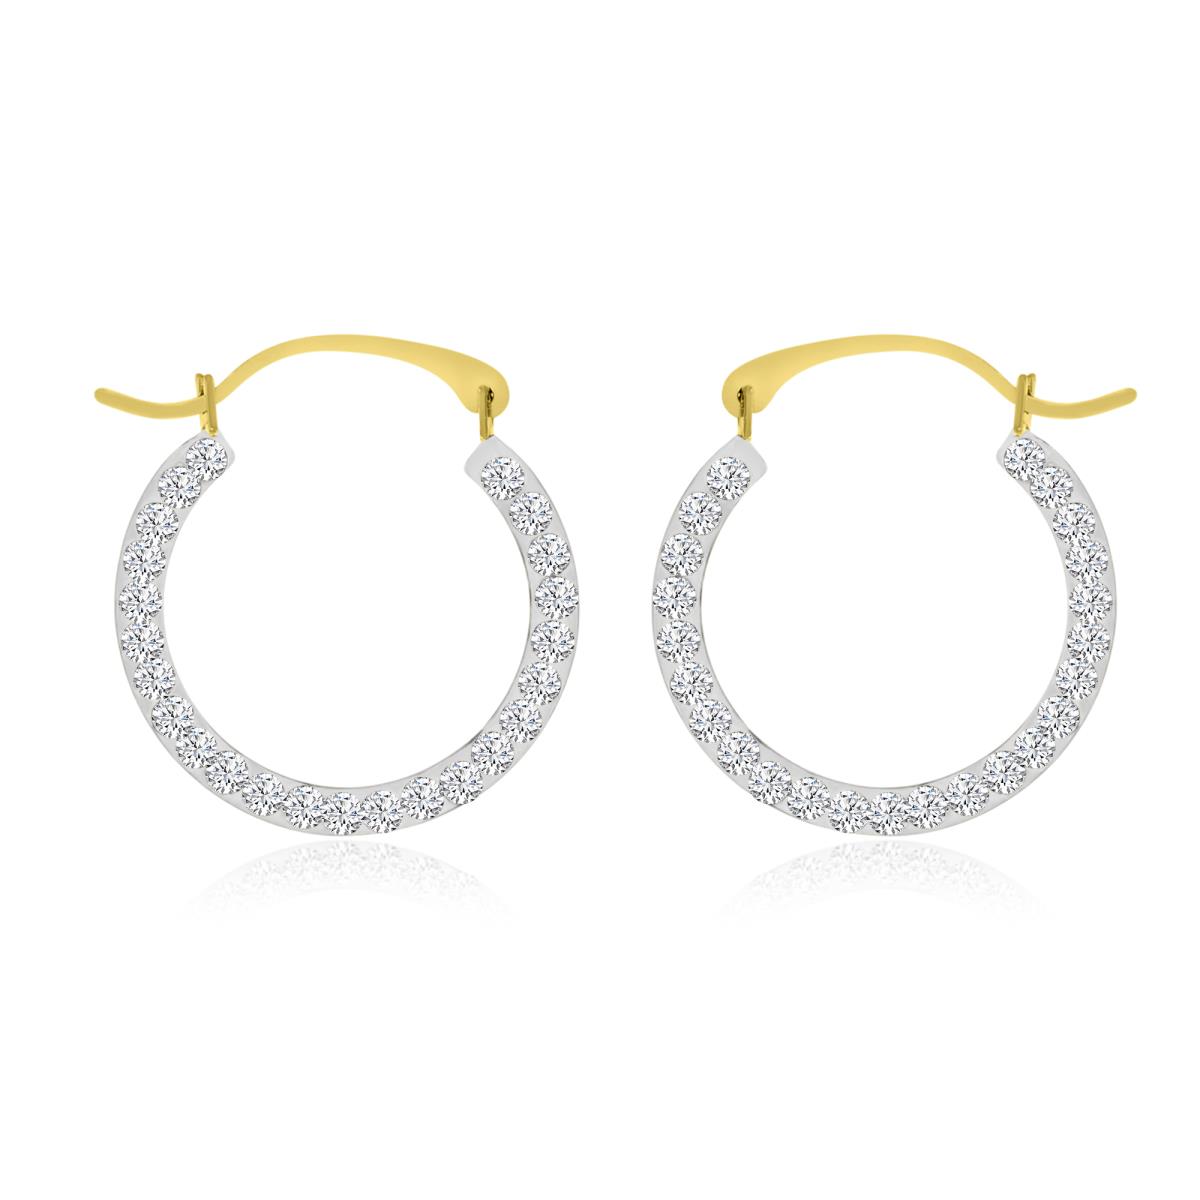 10K Yellow Gold 20MM Polished Swarovski Crystal Hoop Earrings